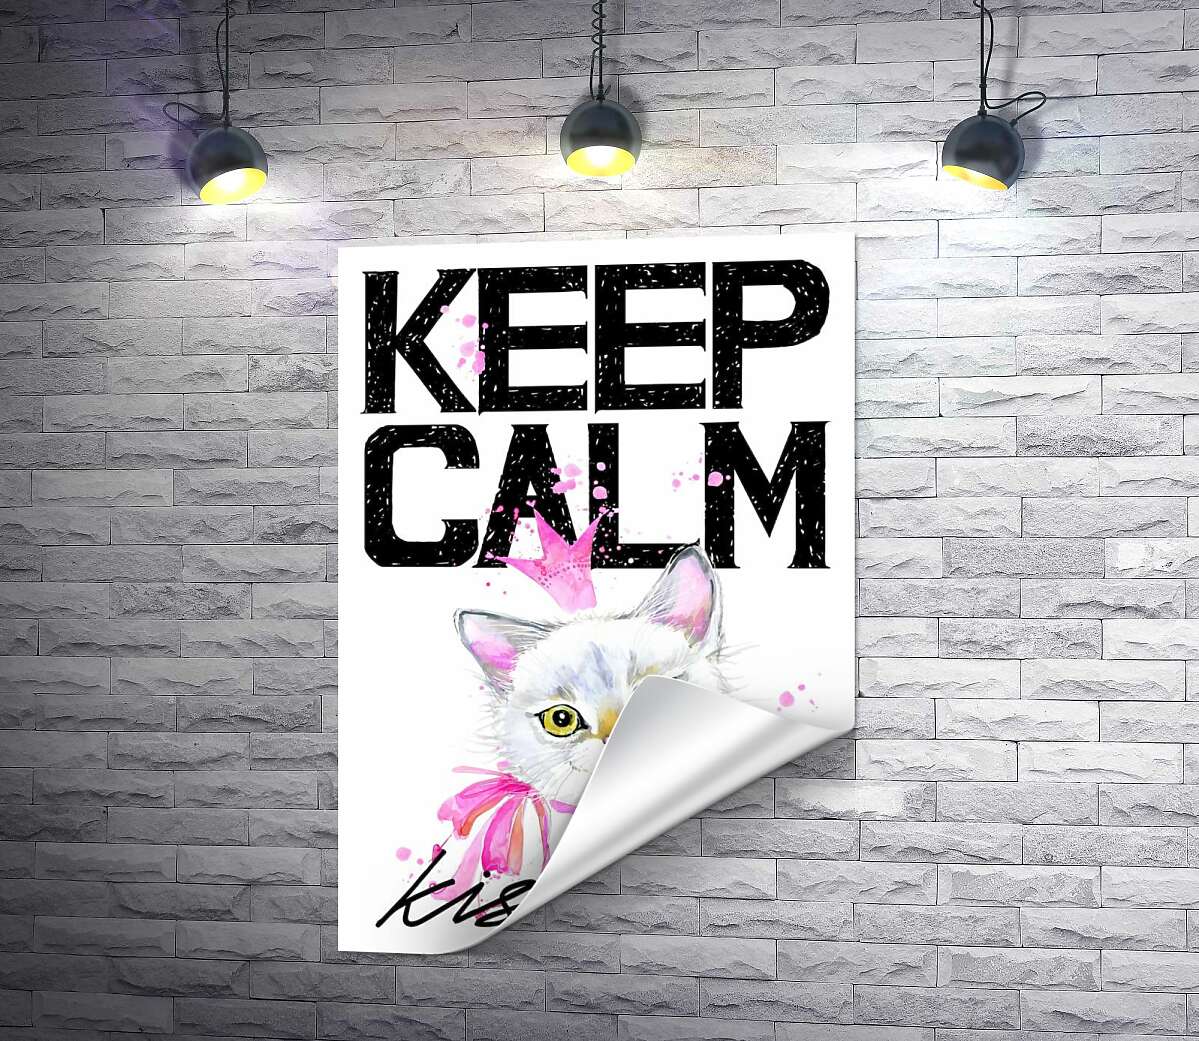 печать Белая кошка-принцесса среди надписи "keep calm and kiss me"